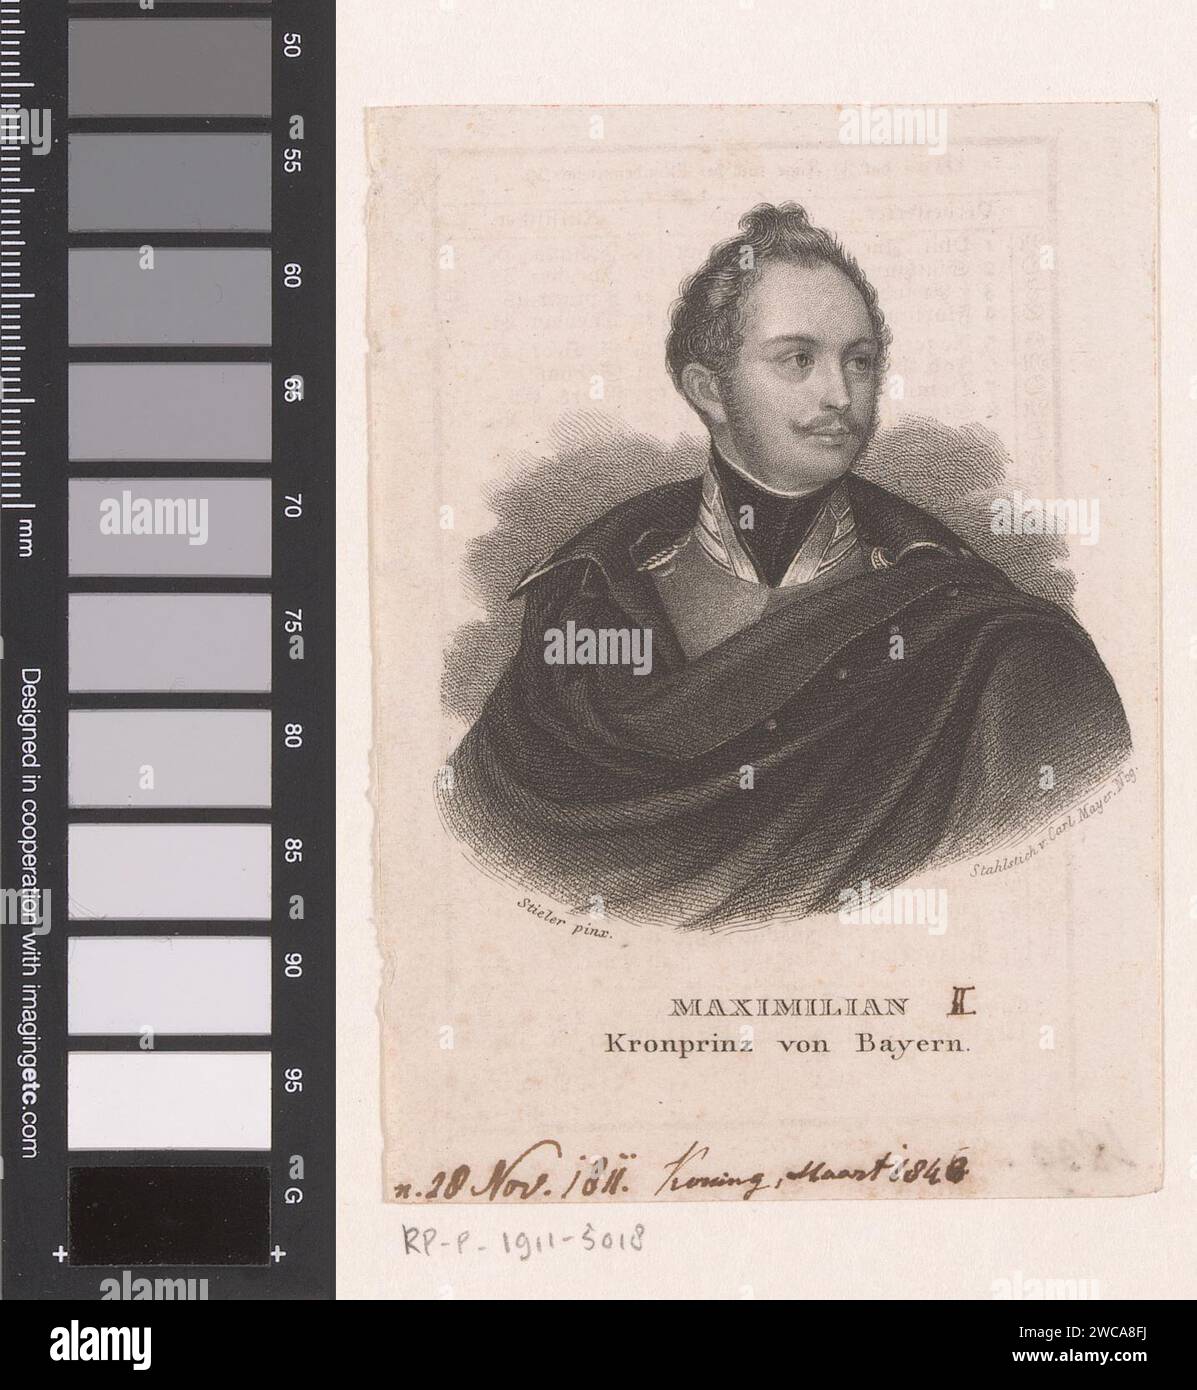 Portrait of Maximilian II van Bavaria as crown prince, Carl Mayer, after Joseph Karl Stieler, c. 1830 - 1848 print  Nuremberg paper steel engraving historical persons Stock Photo